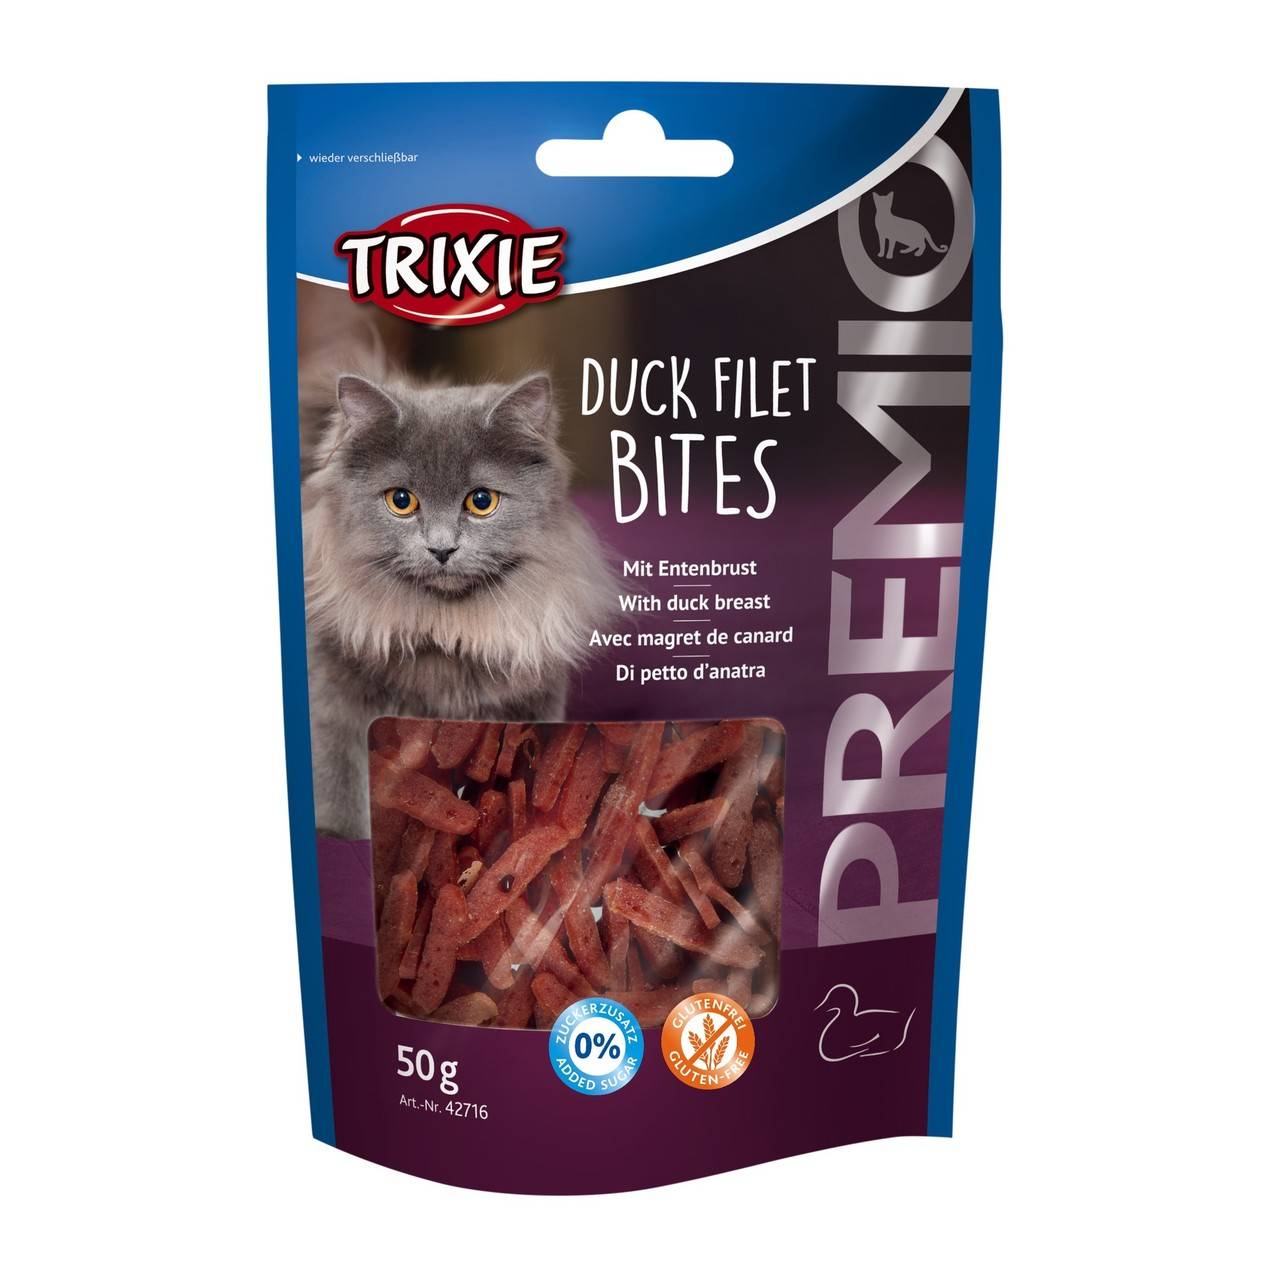 Trixie Premio Duck Filet Bites – лакомство с филе утки для котов